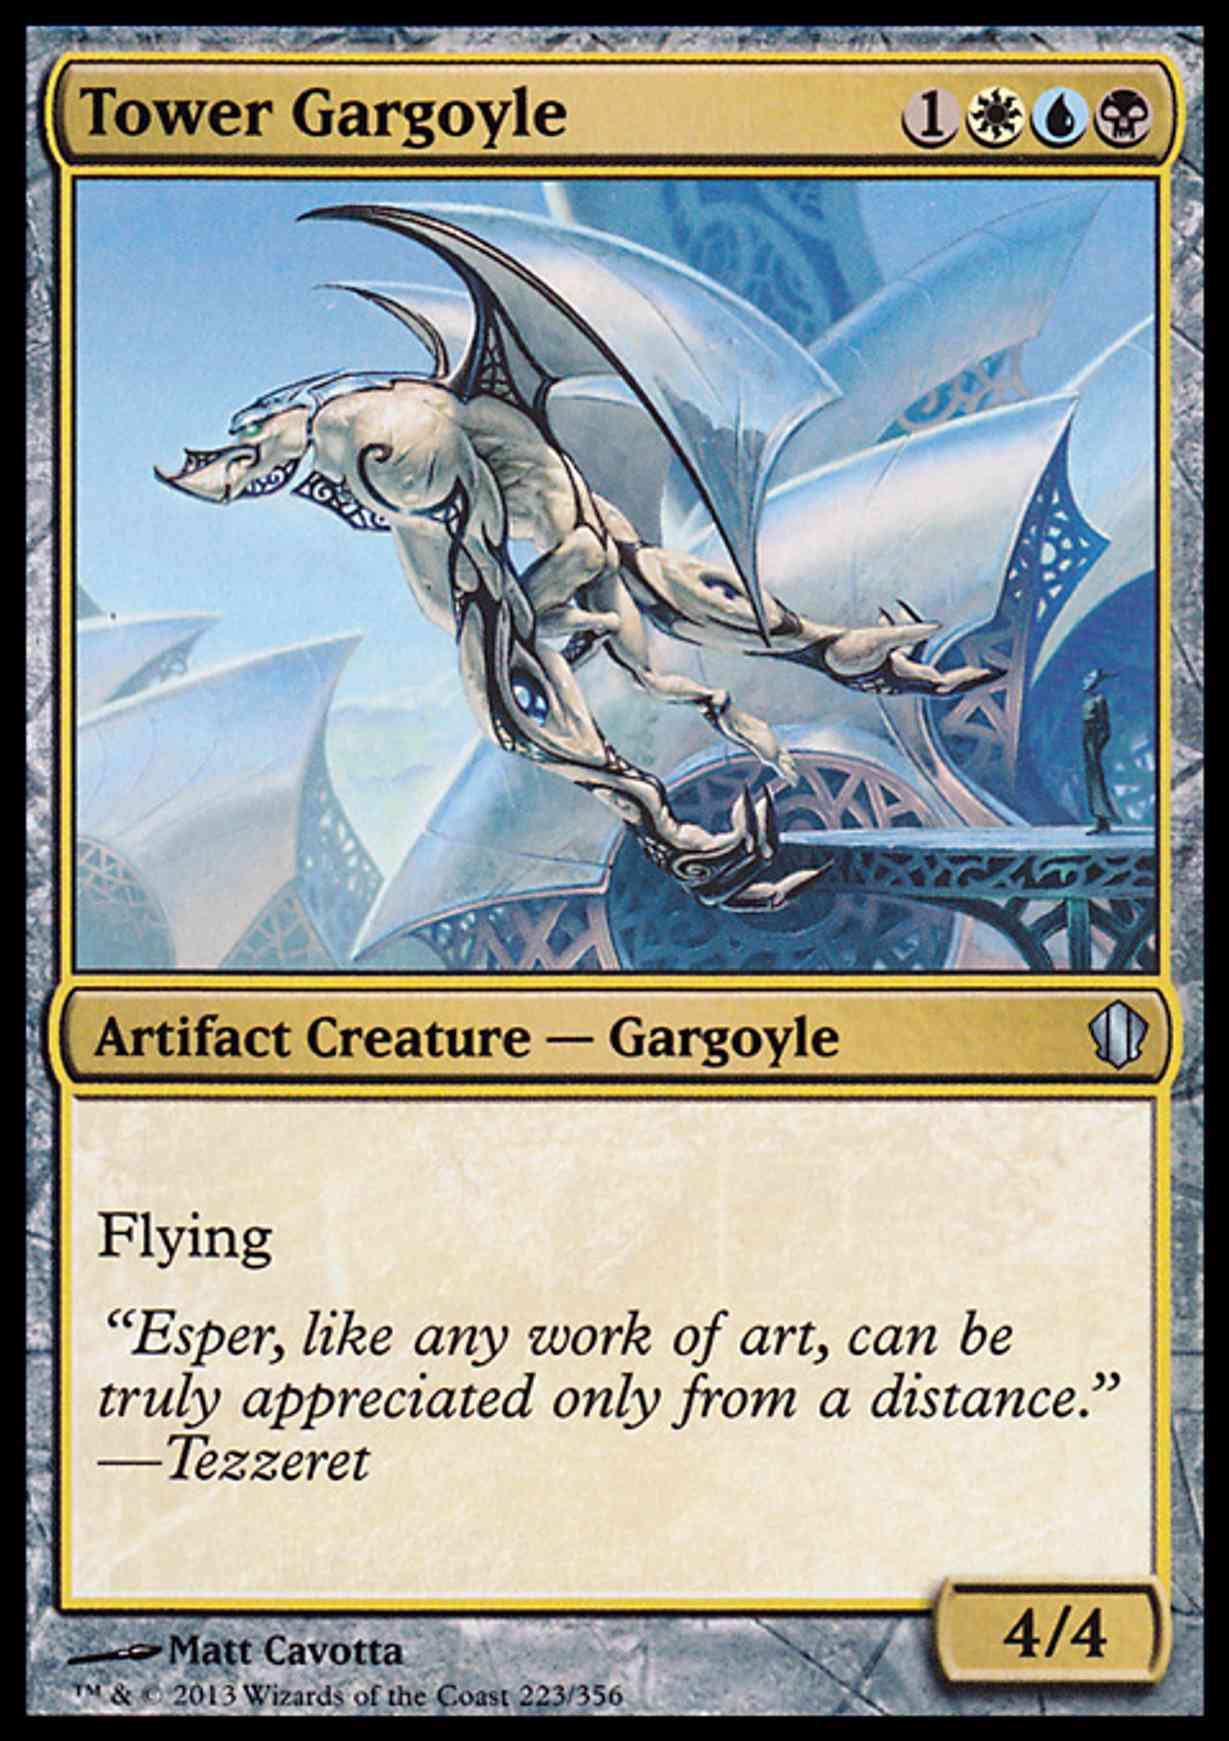 Tower Gargoyle magic card front